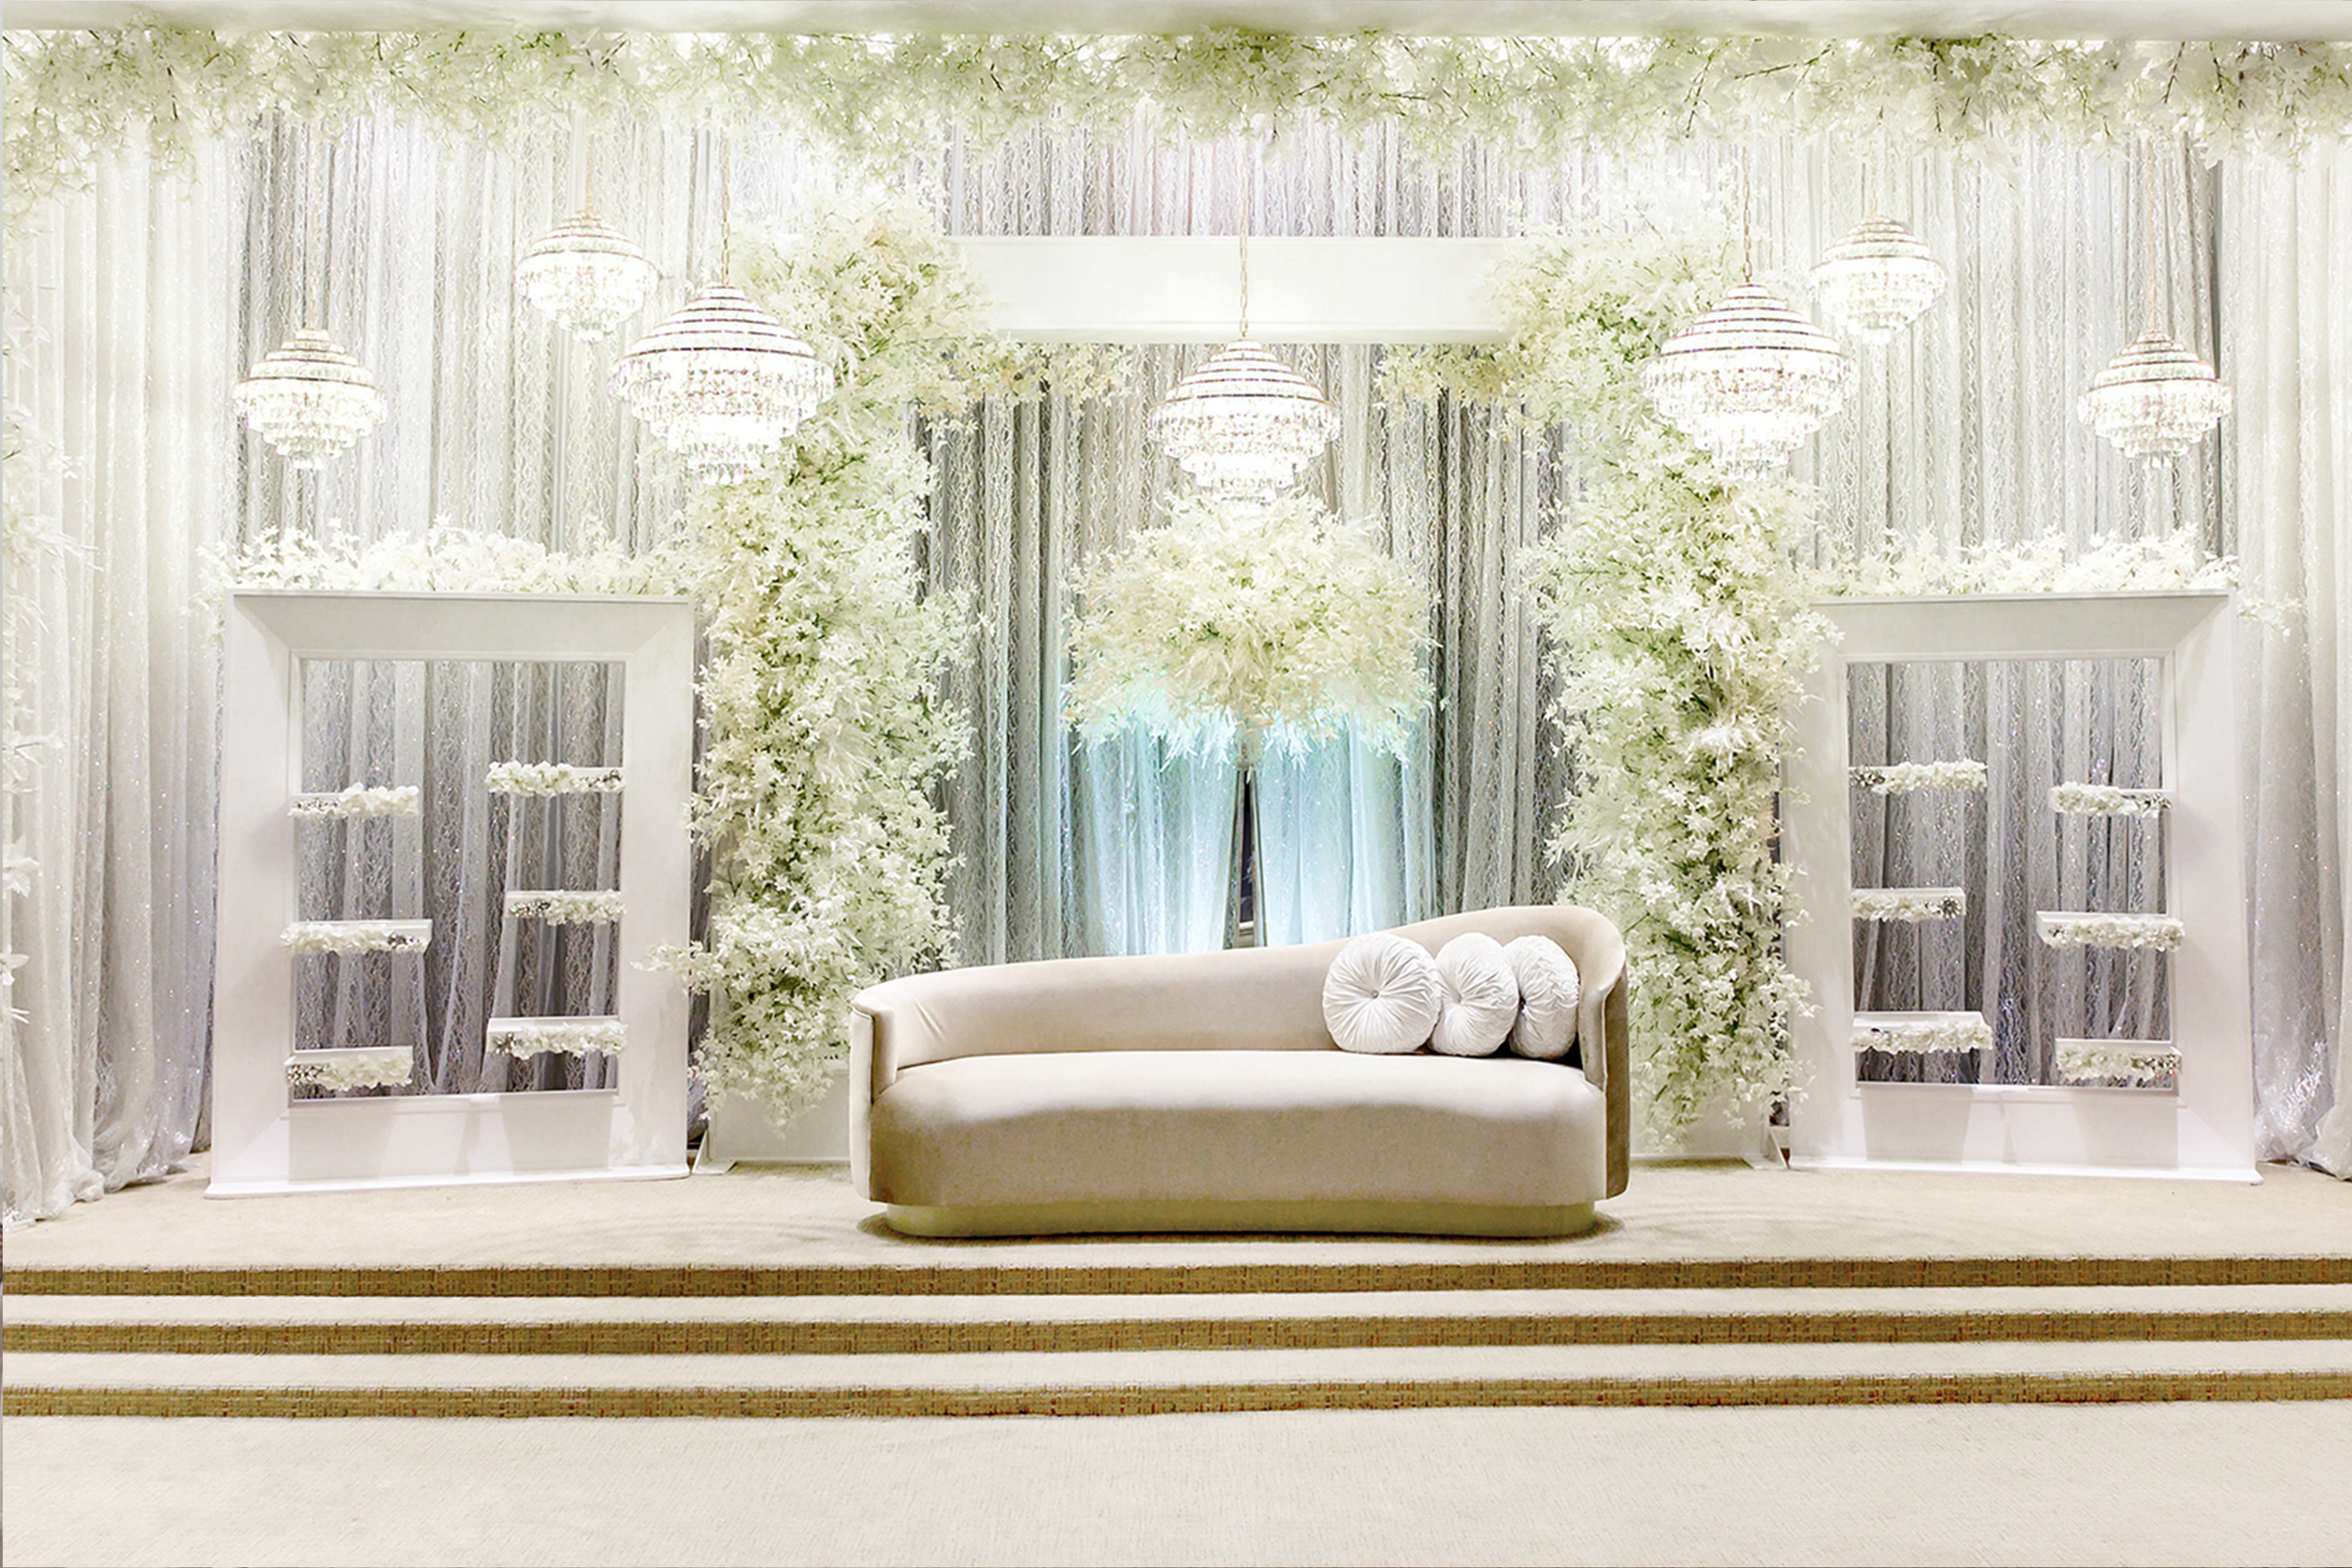 Malay Wedding Venue Singapore